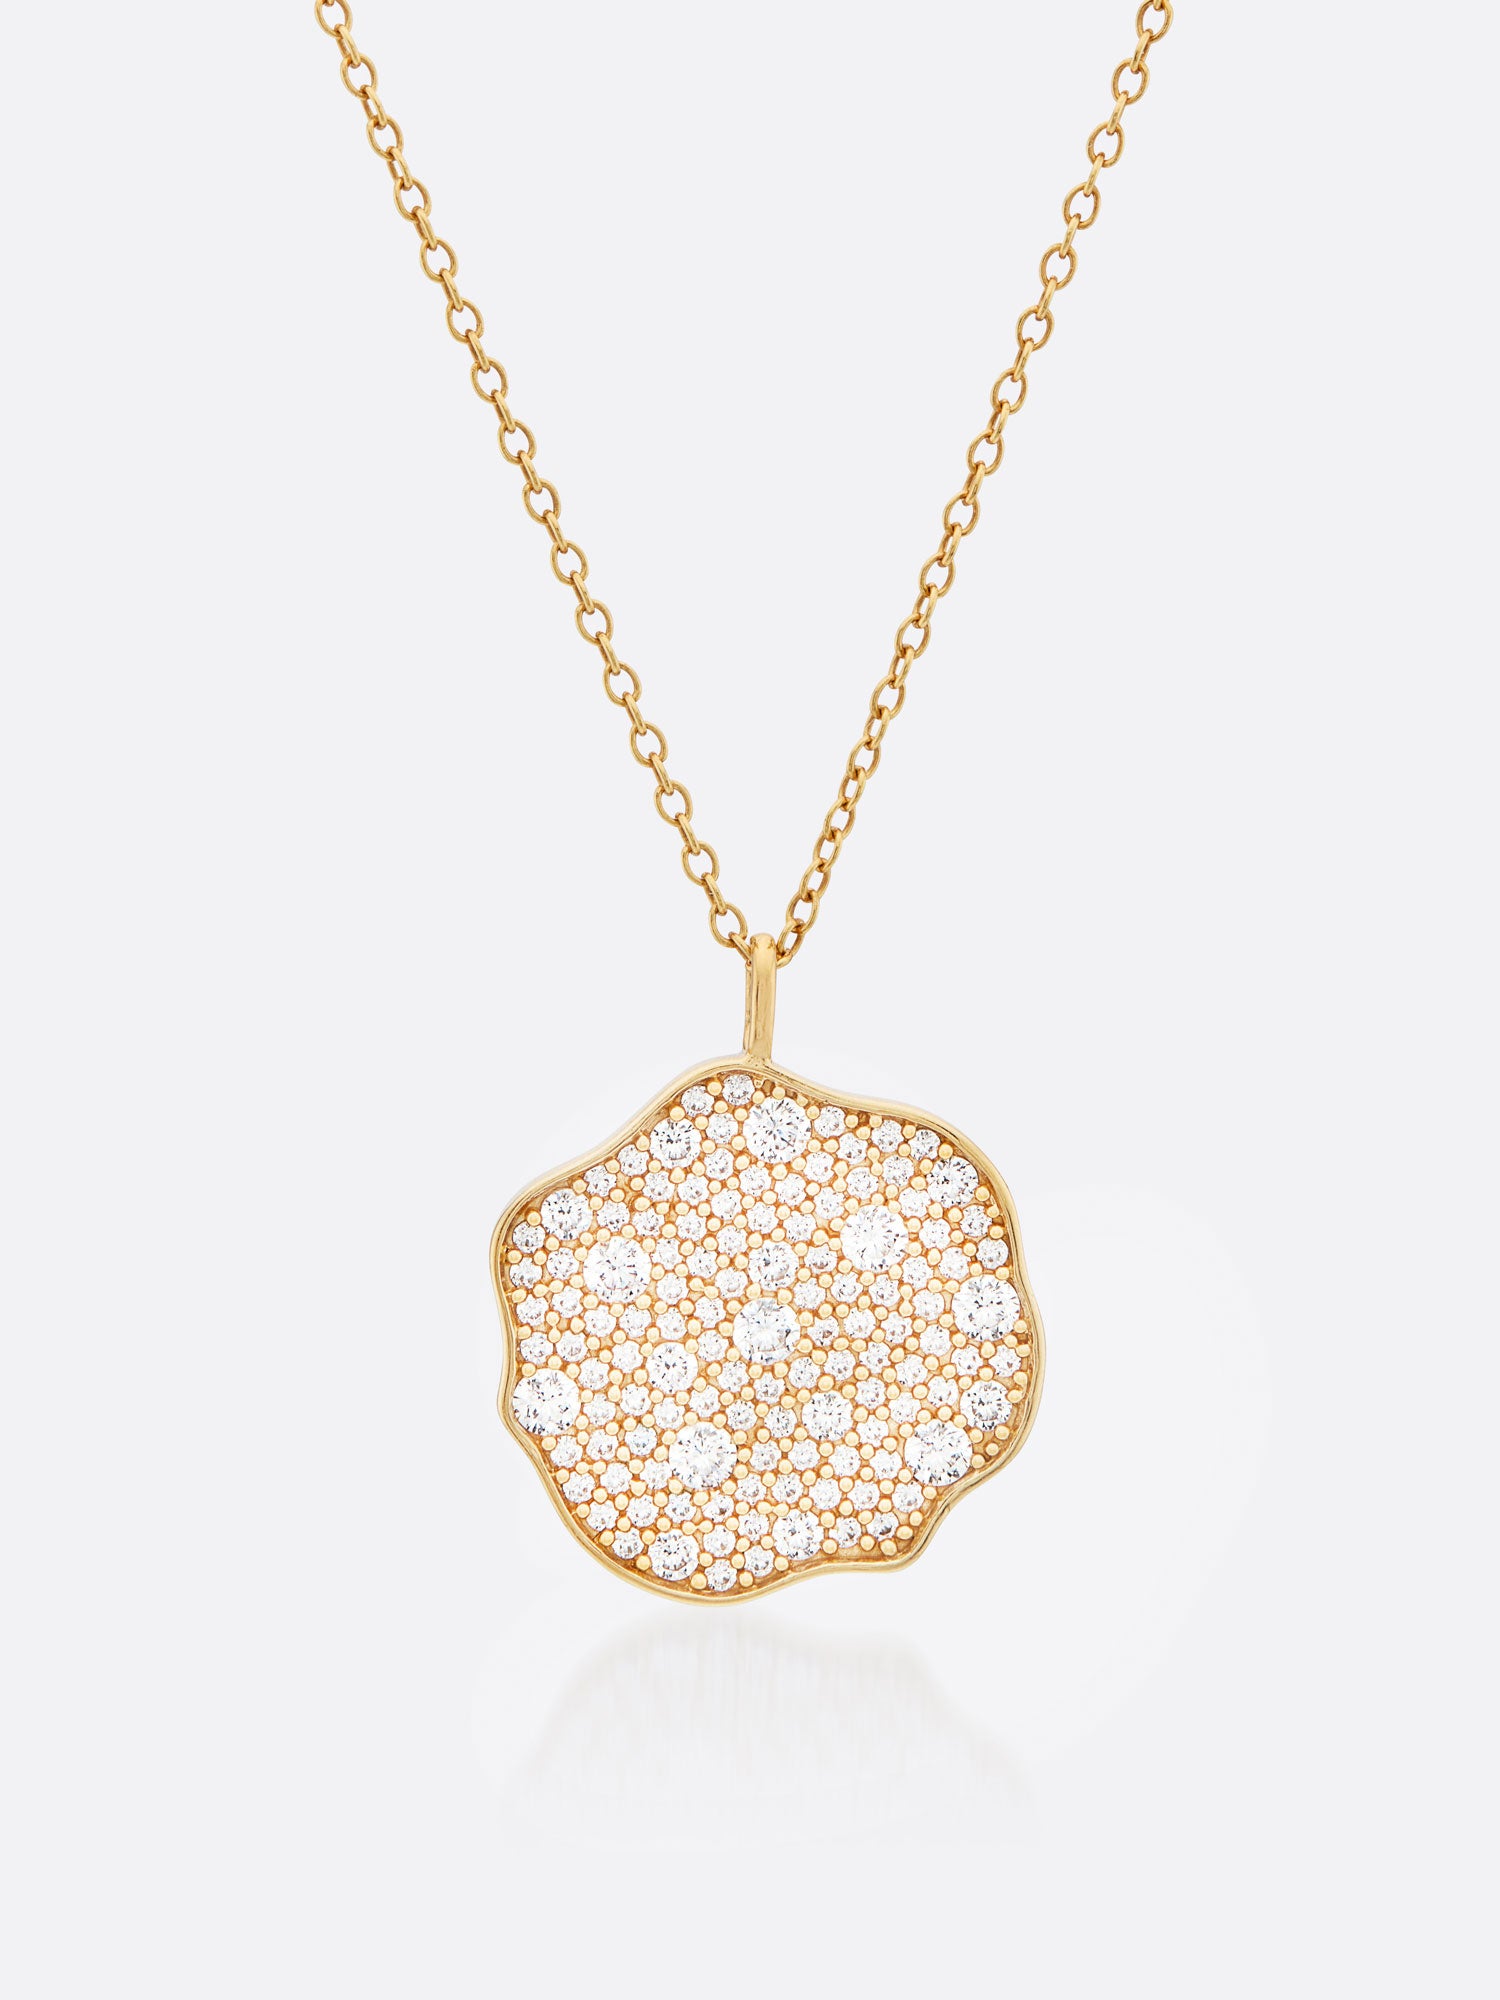 18k Yellow gold pavé diamond pendant necklace front view